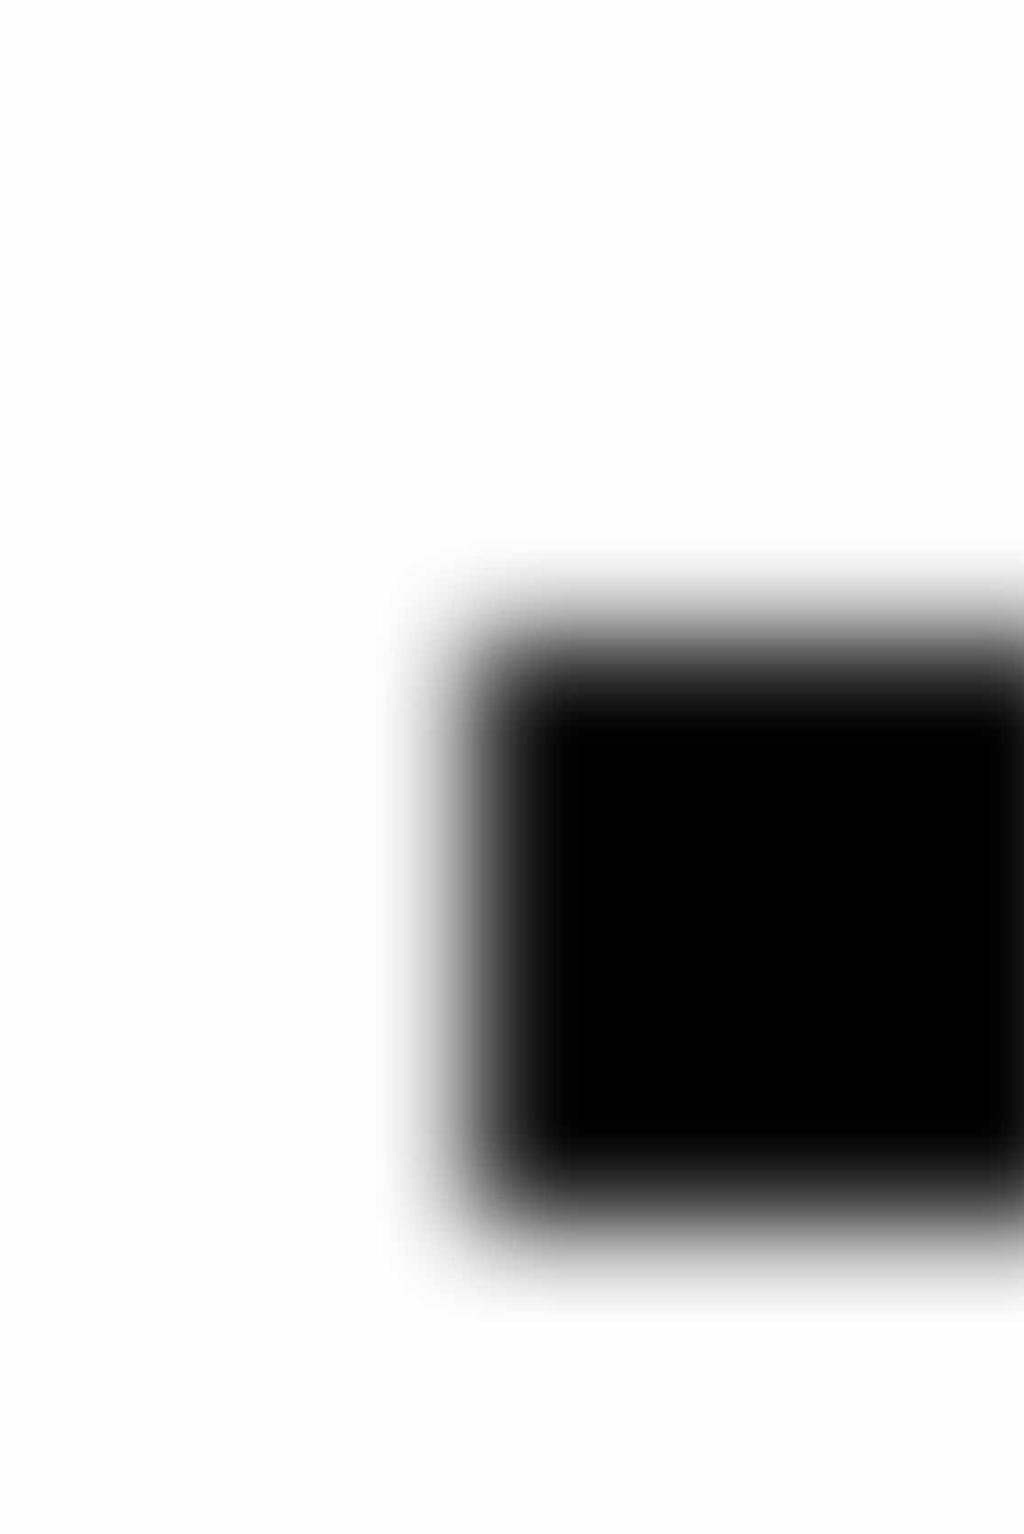 Sebastian Landmesser Landabsatz 10 45731 Waltrop Tel.